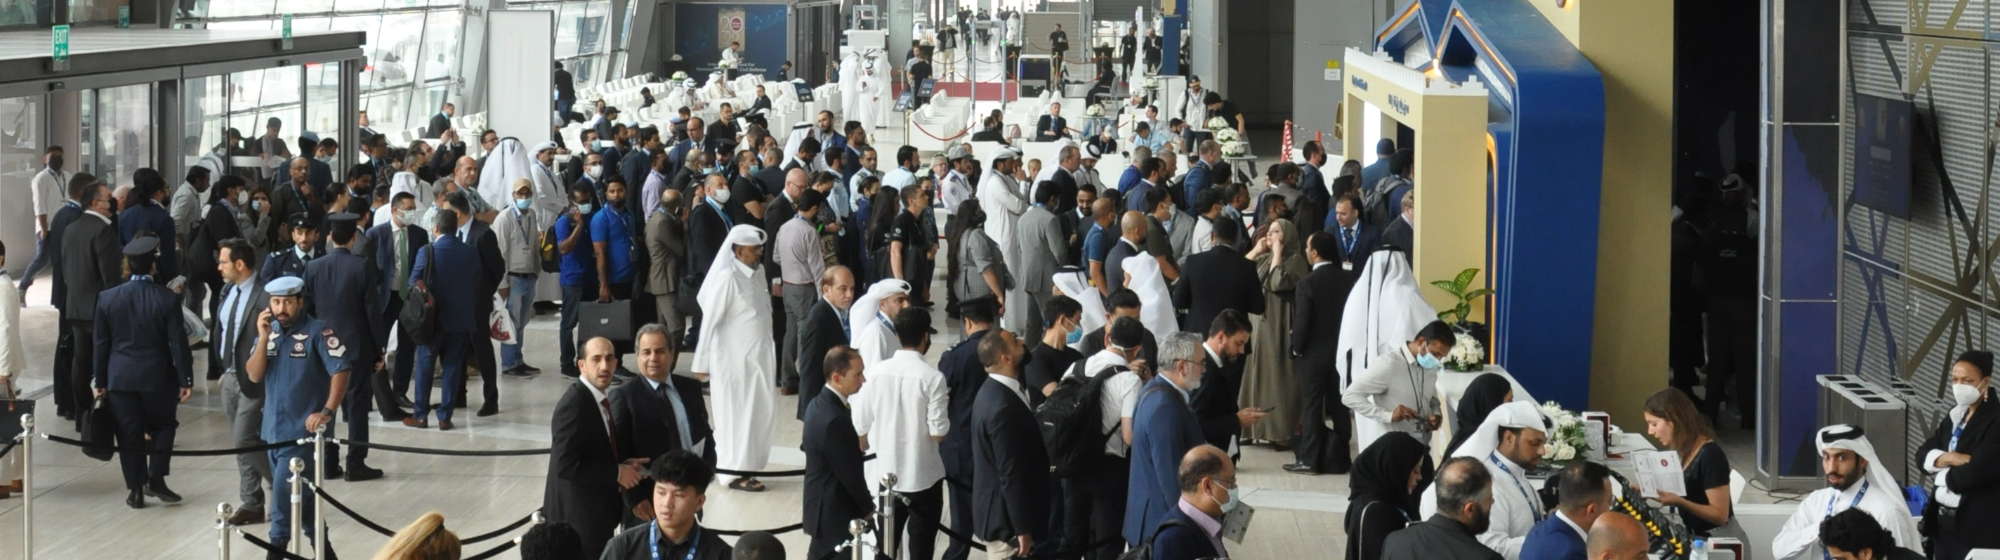 Entrance of Milipol Qatar with welcome desks